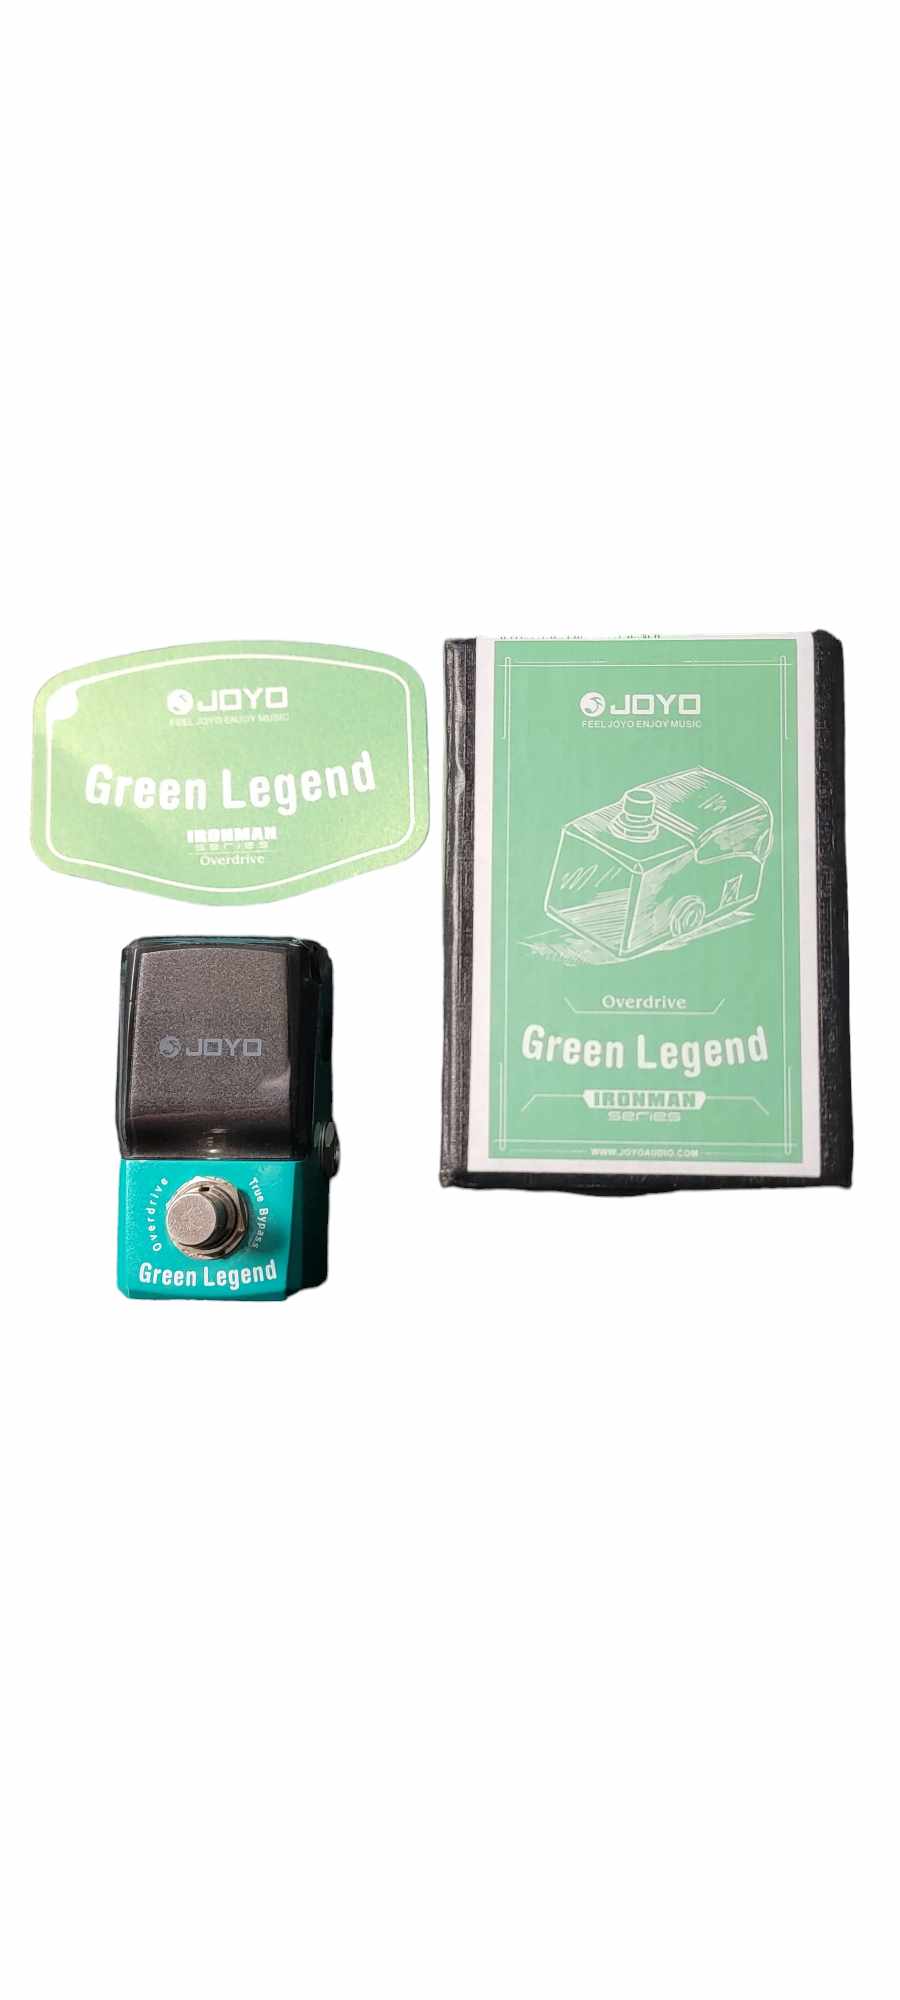 JOYO Green Legend